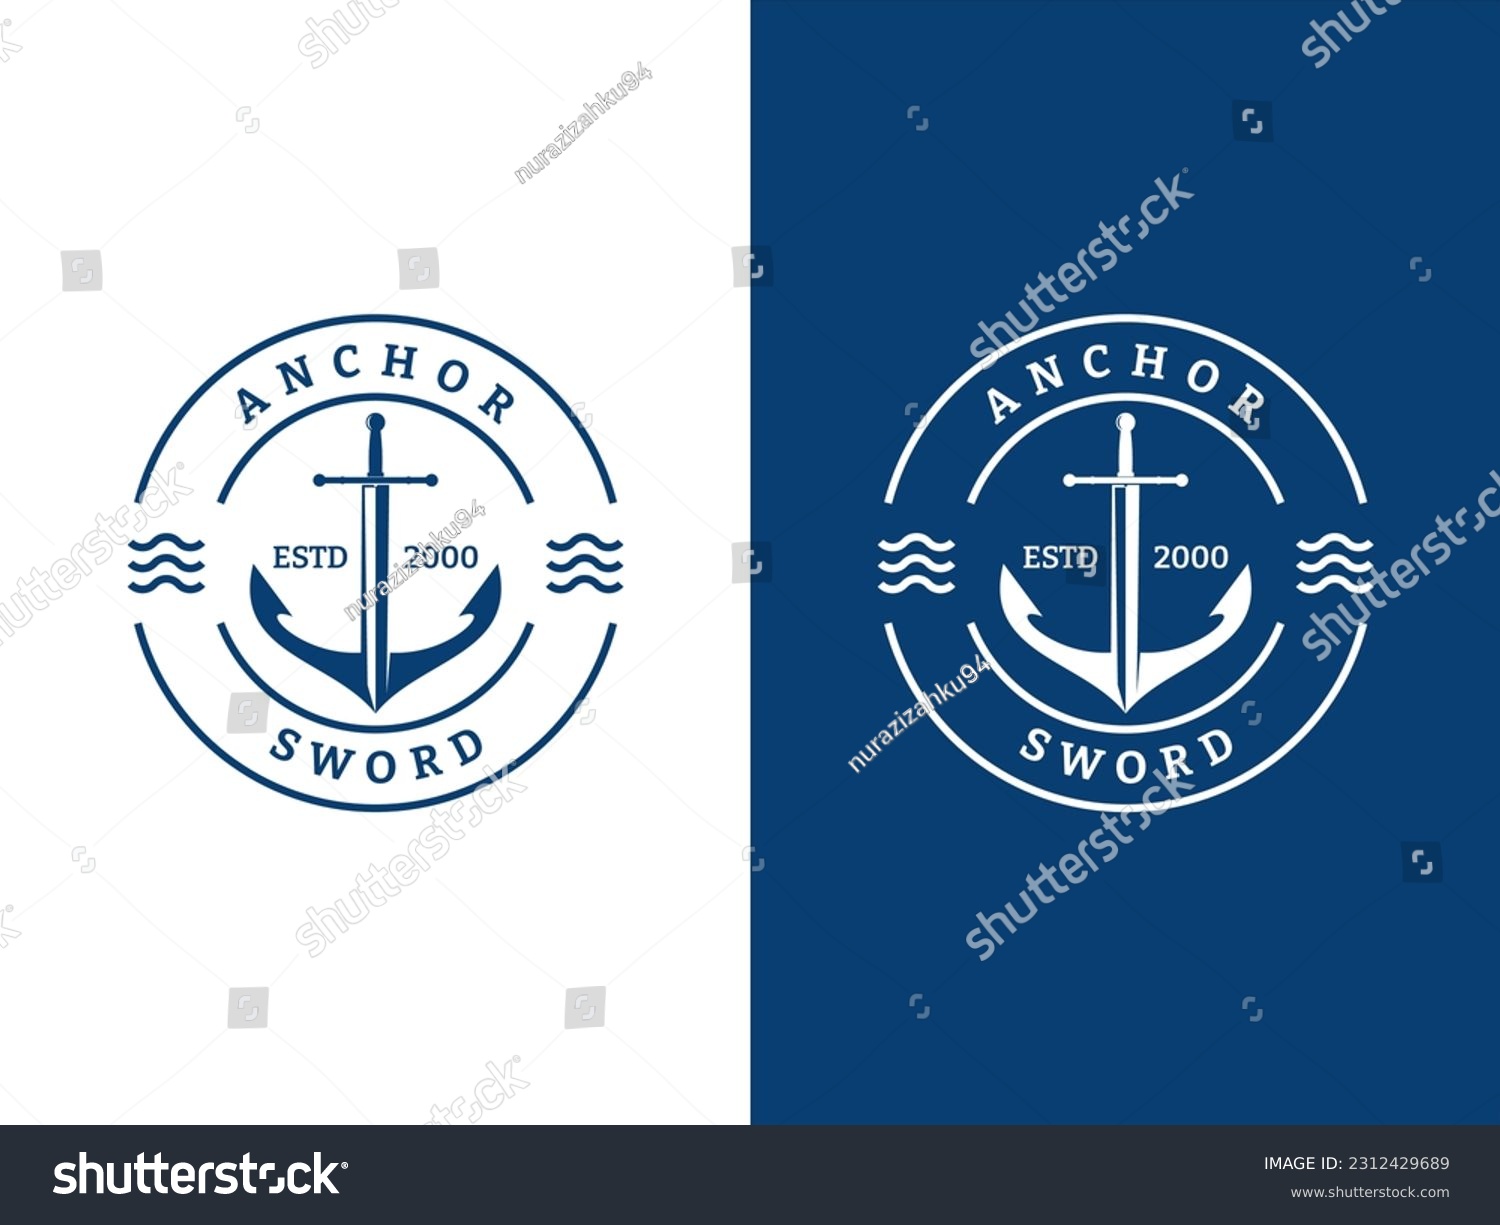 SVG of Anchor with sword symbol logo design vector svg